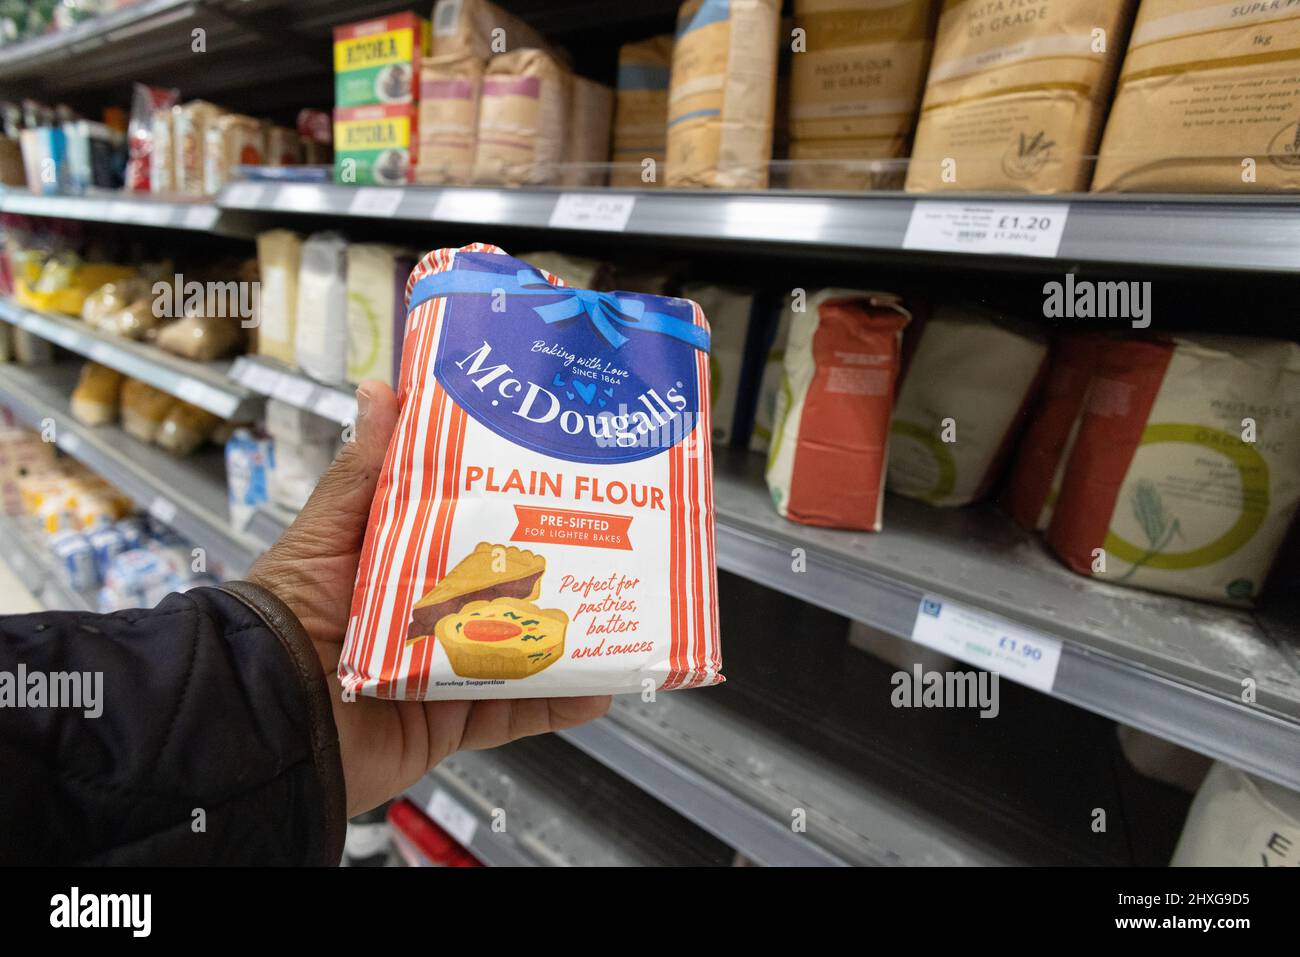 Flour Bag; buying a bag of flour - McDougalls Plain flour, in a supermarket with flour bags on the supermarket shelves, Waitrose supermarket UK Stock Photo